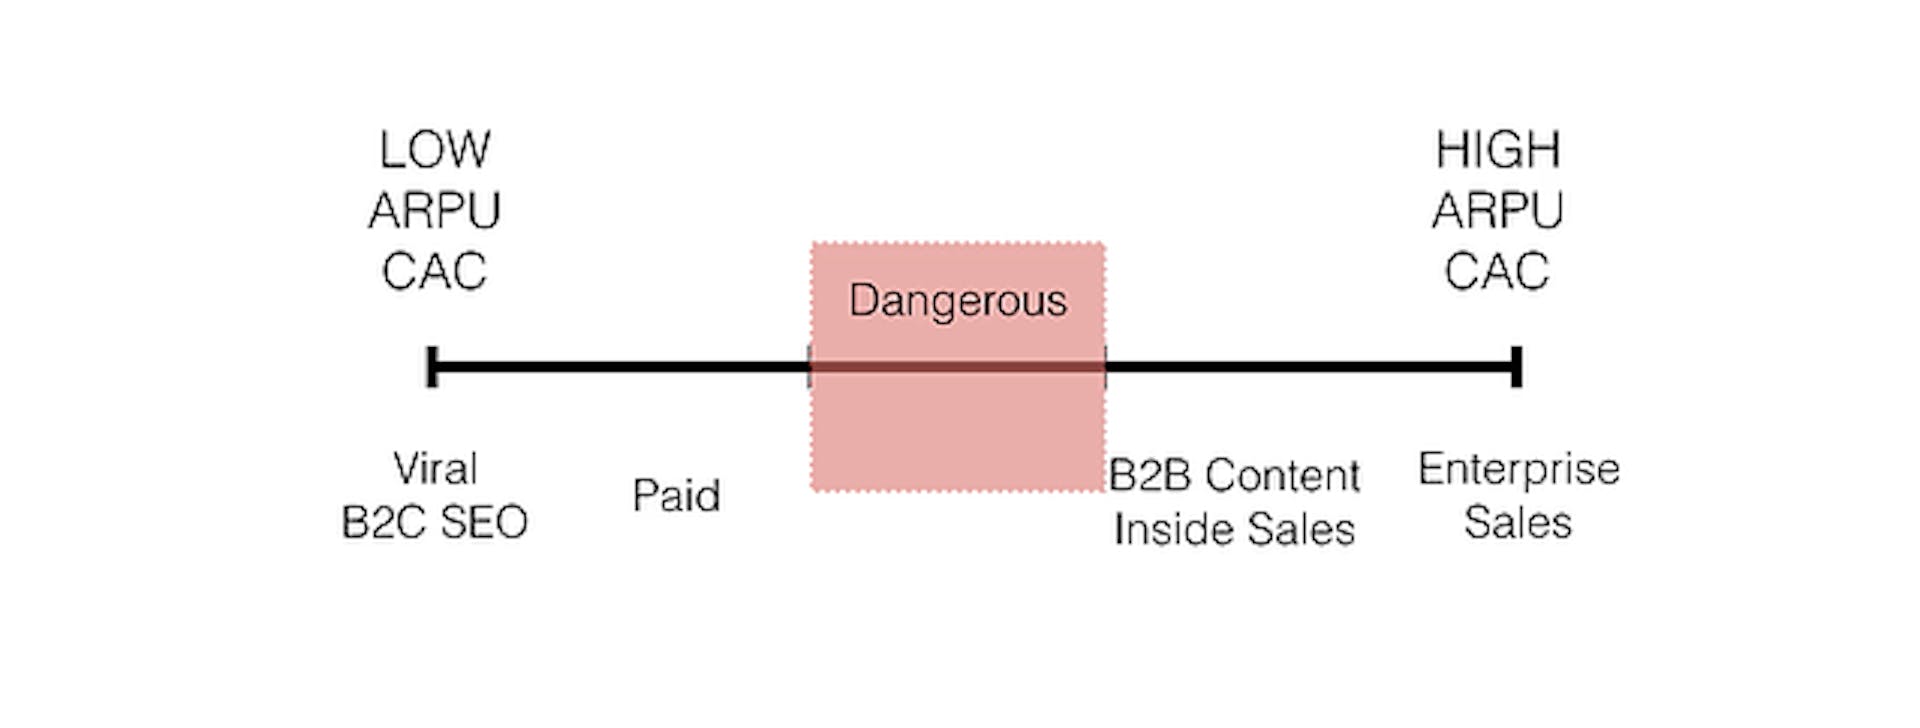 Low ARPU CAC: Viral B2C SEO, paid
High ARPU CAC: B2B content inside sales, enterprise sales